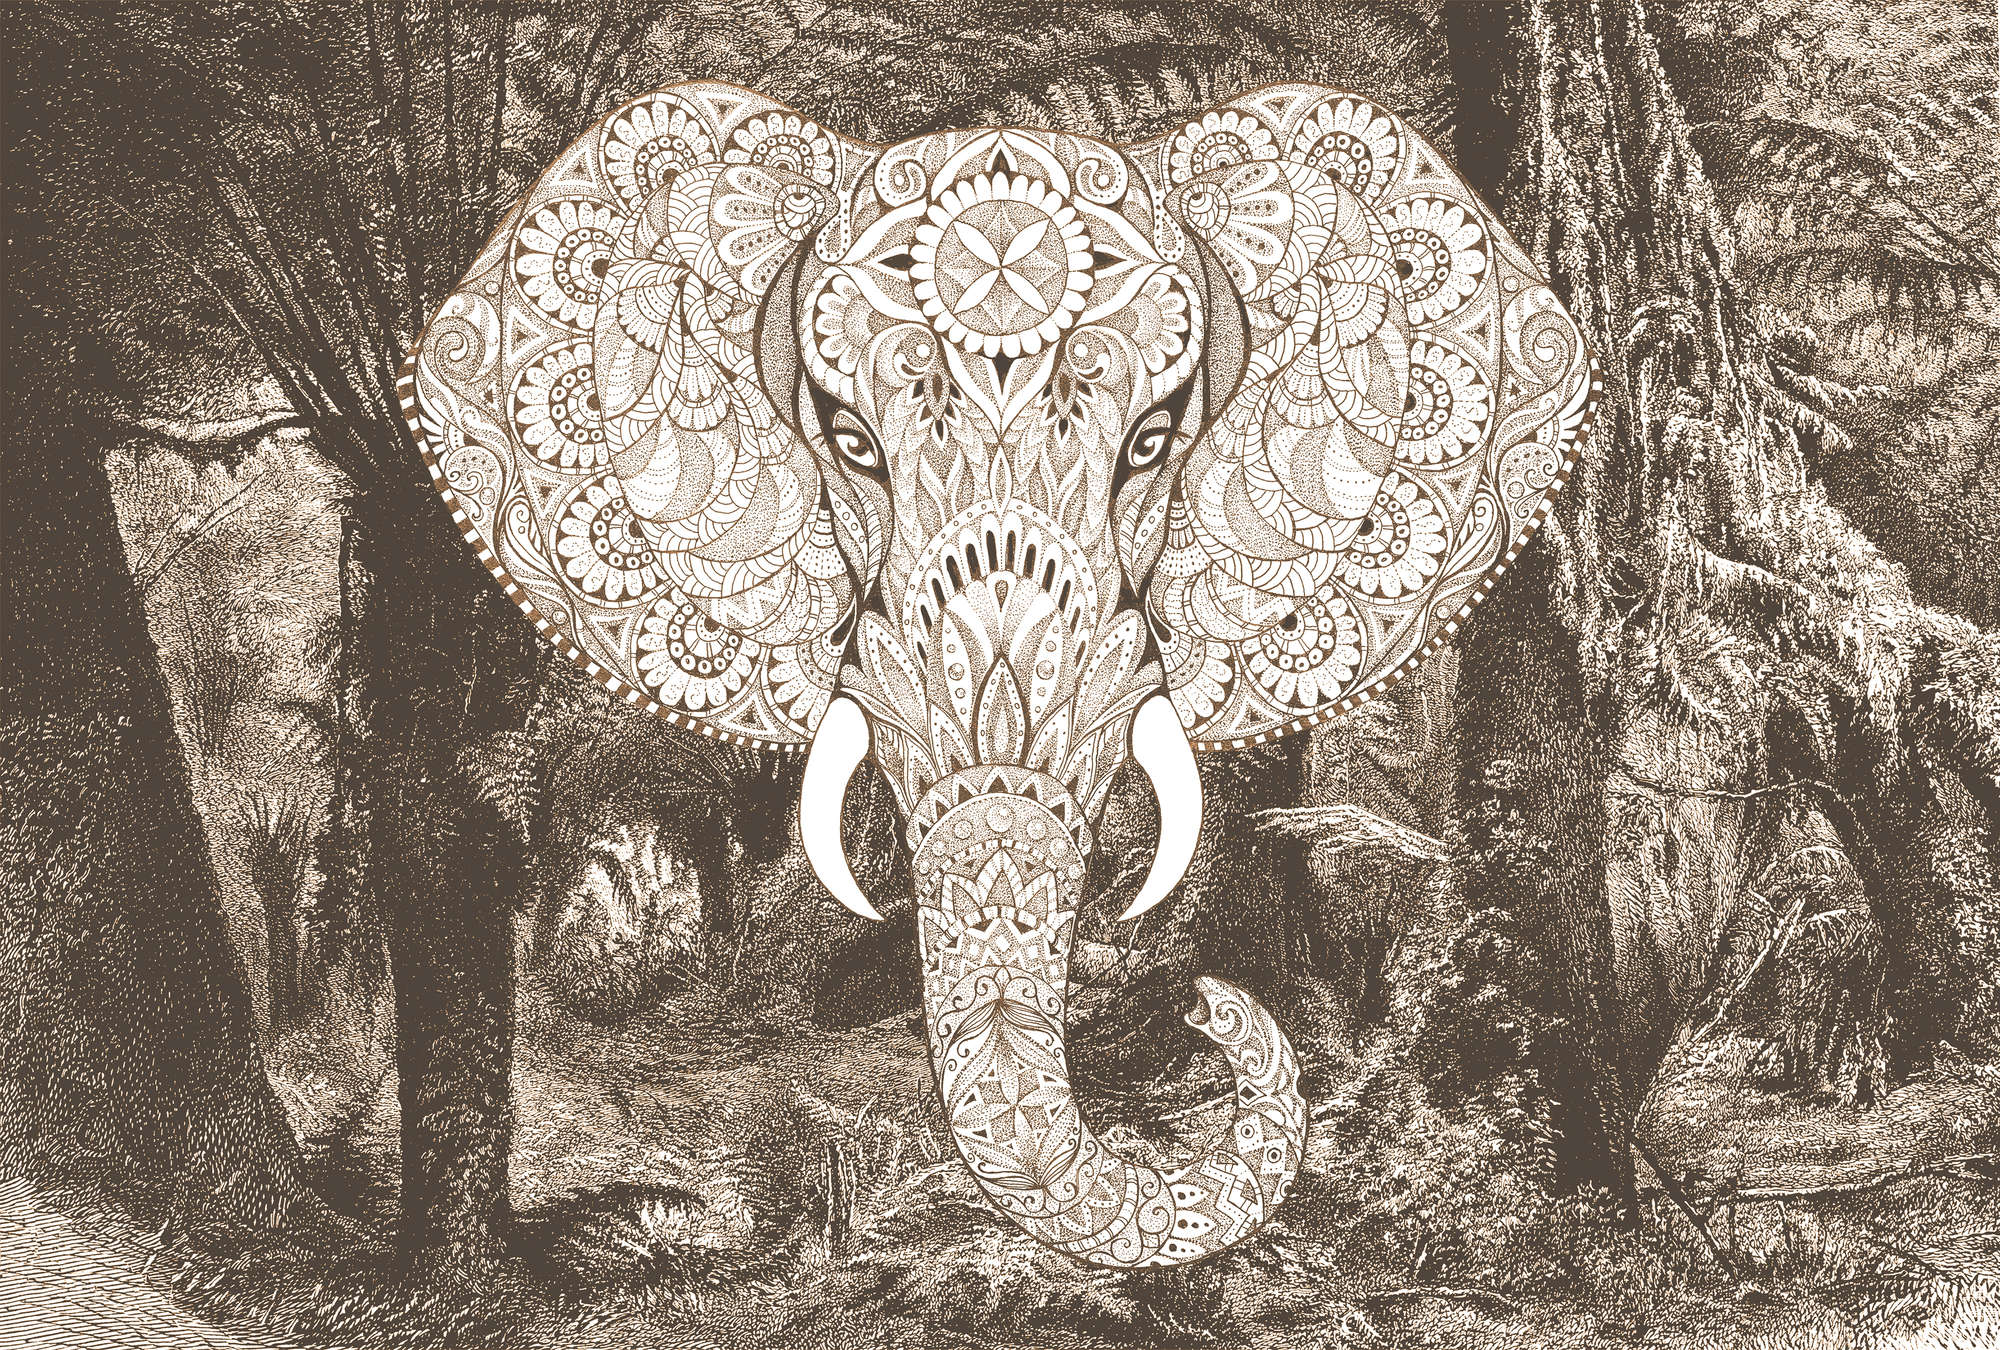             Muurschildering olifant in boho-stijl, jungle-motief in sepia - beige, grijs, wit
        